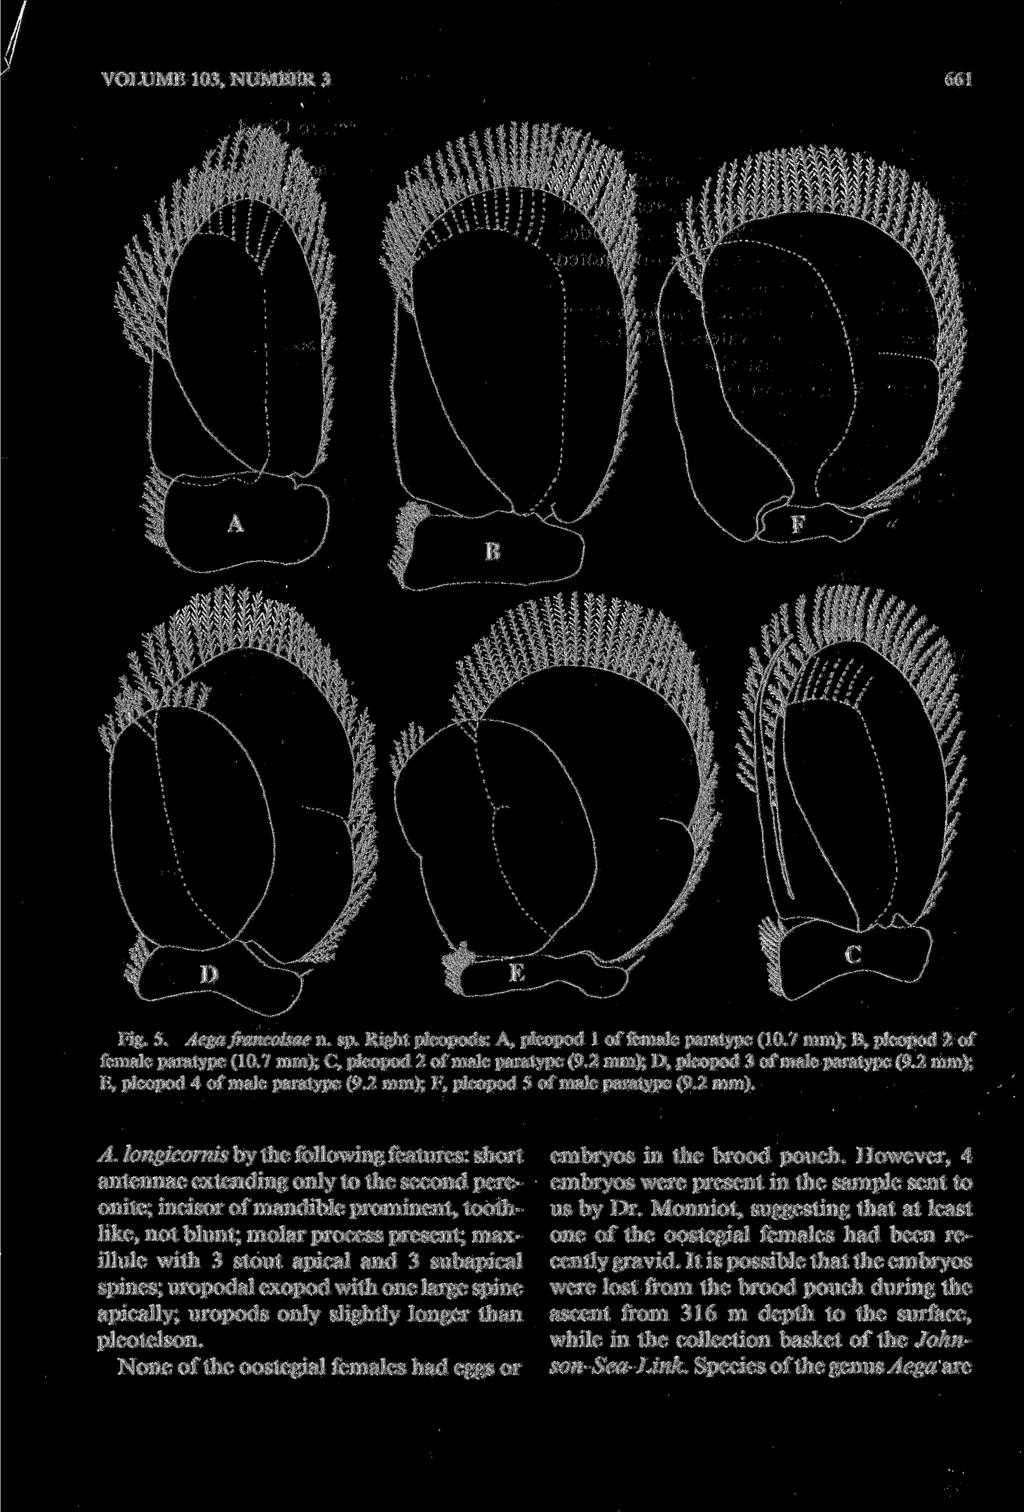 VOLUME 103, NUMBER 3 661 Fig. 5. Aega francoisae n. sp. Right pleopods: A, pleopod 1 of female paratype (10.7 mm); B, pleopod 2 of female paratype (10.7 mm); C, pleopod 2 of male paratype (9.